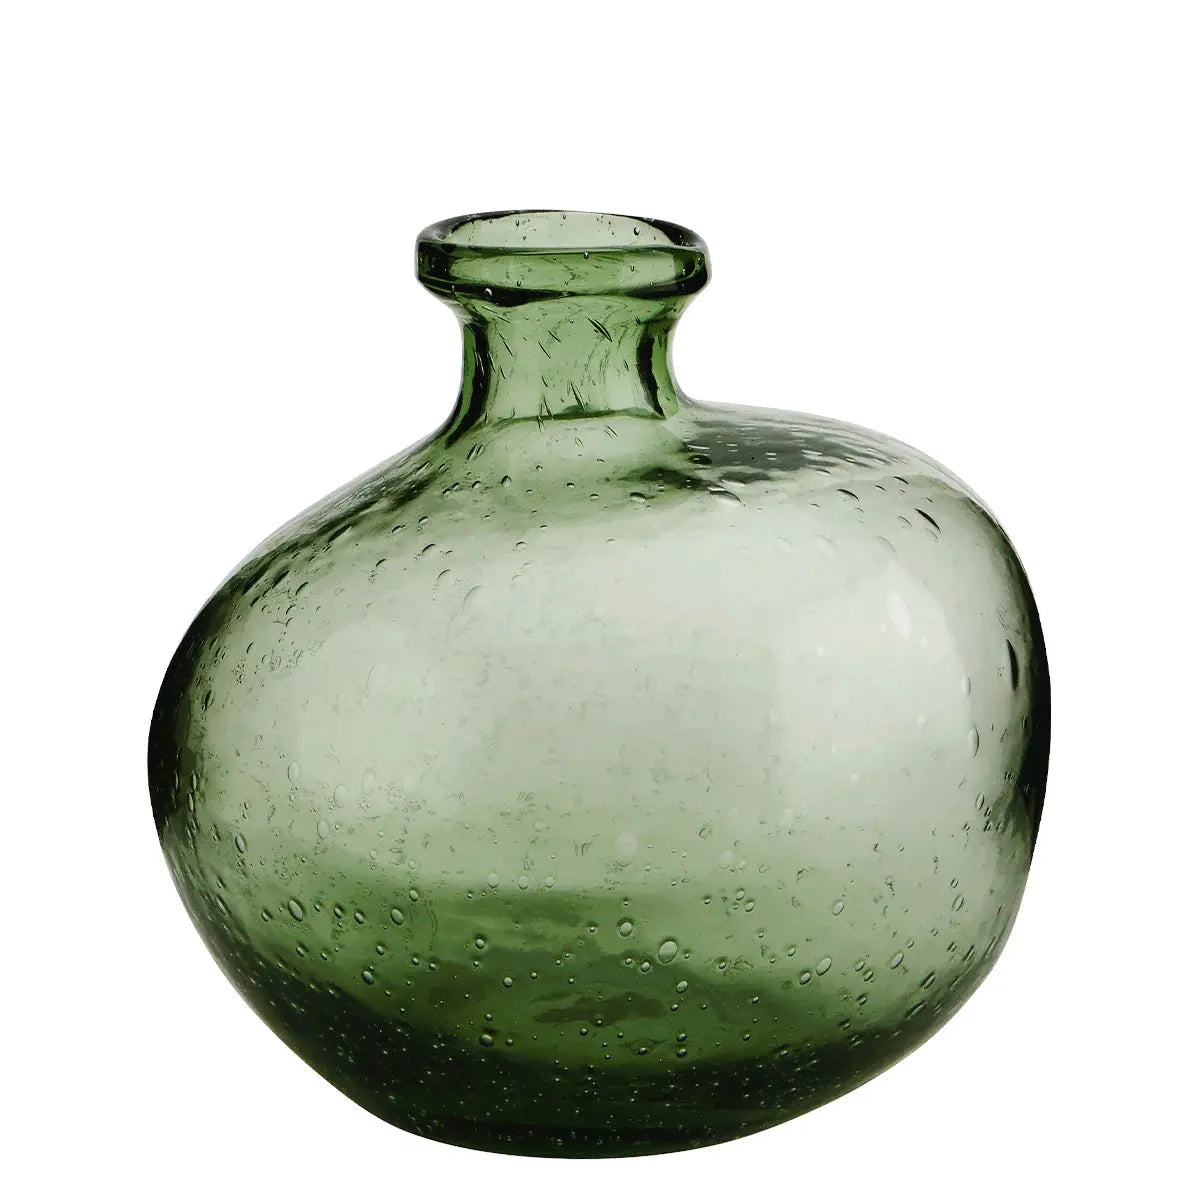 Organic Shaped Green Glass Vase Wooden Horse